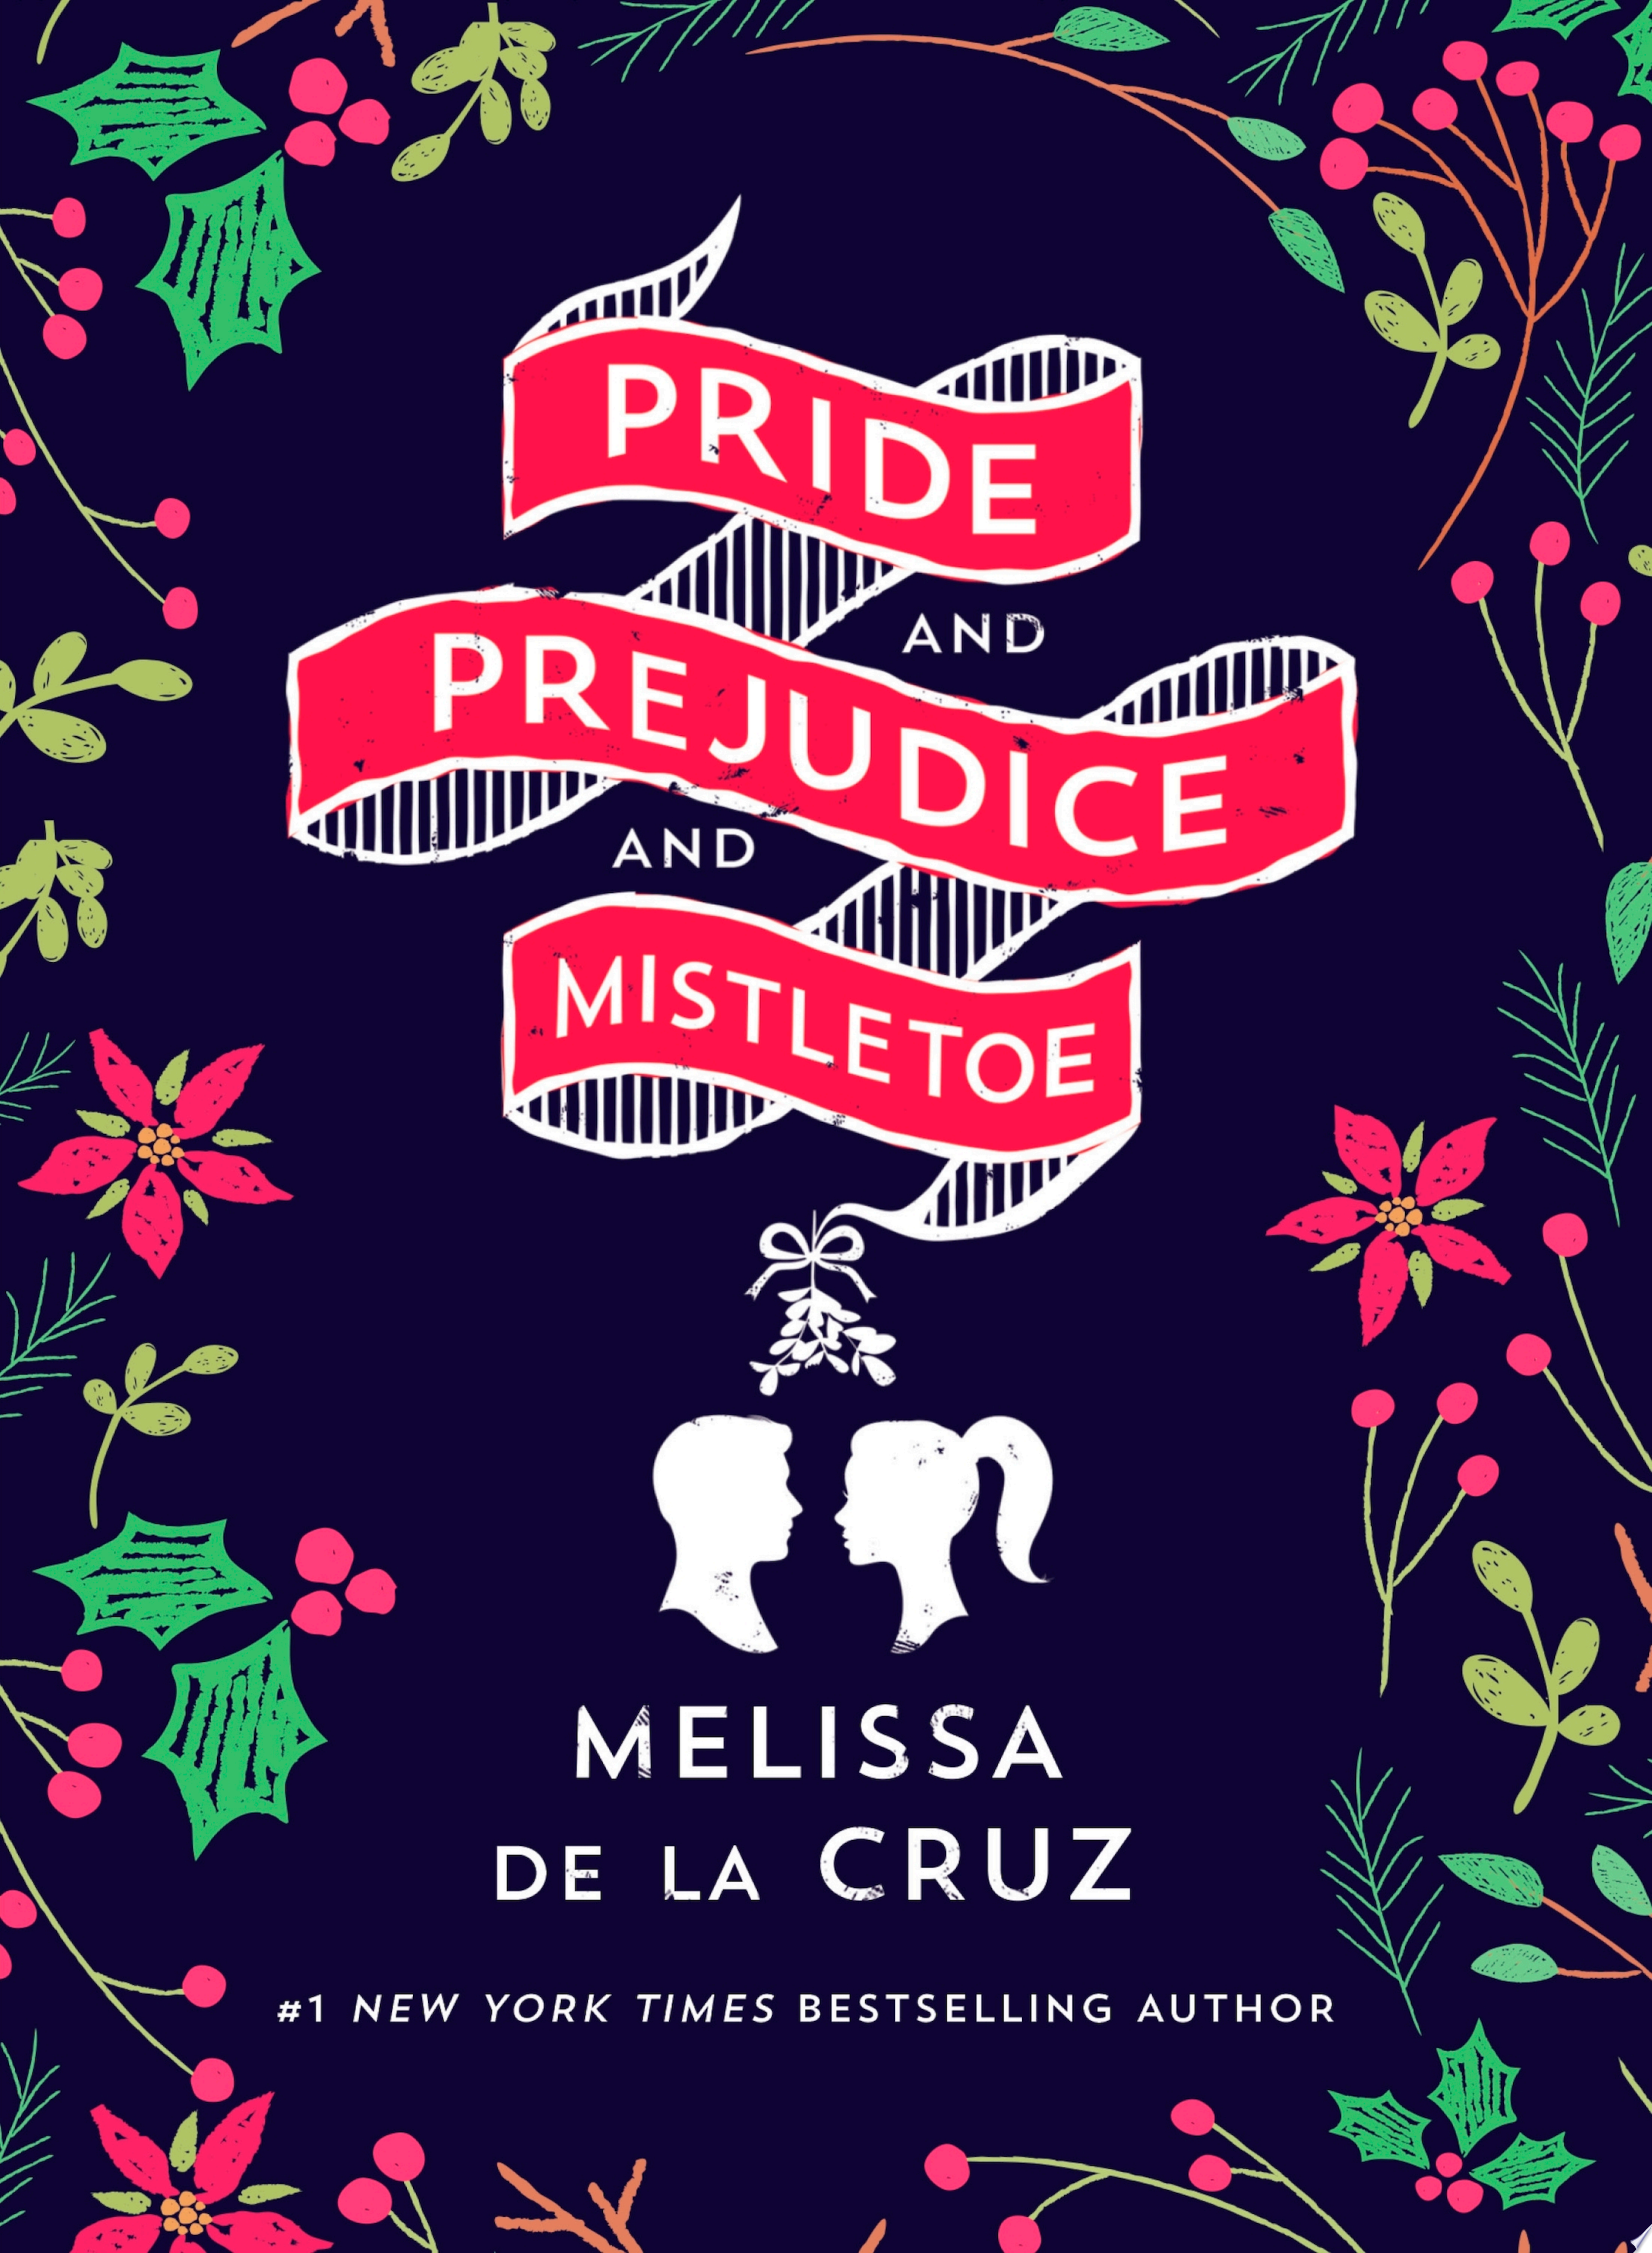 Image for "Pride and Prejudice and Mistletoe"